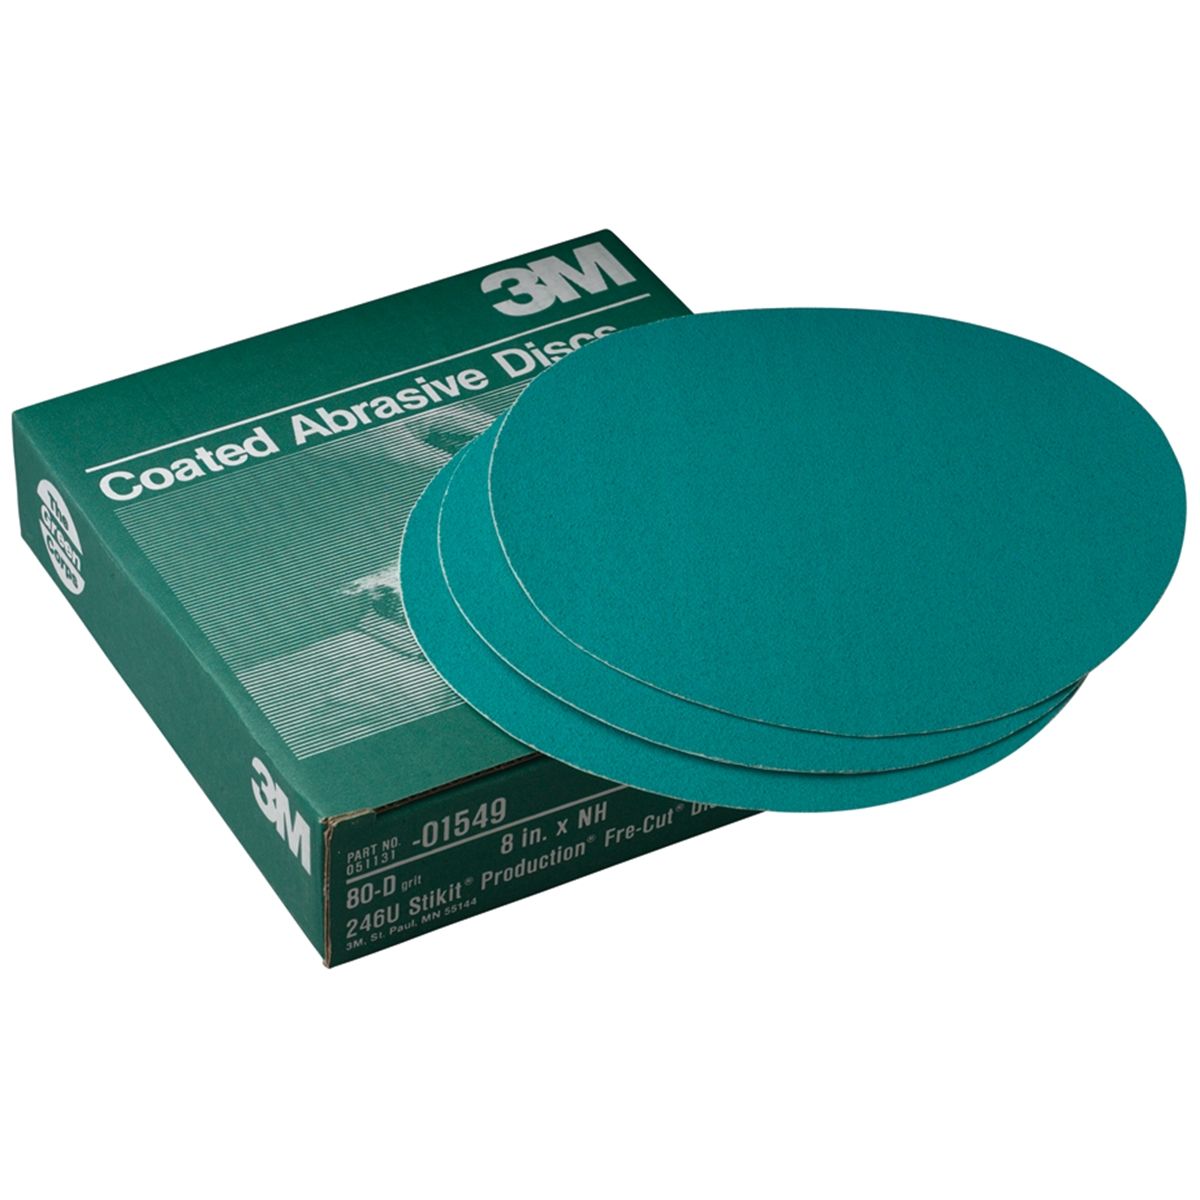 Green CorpsT StikitT ProductionT Disc - 8 In - 80 Grade